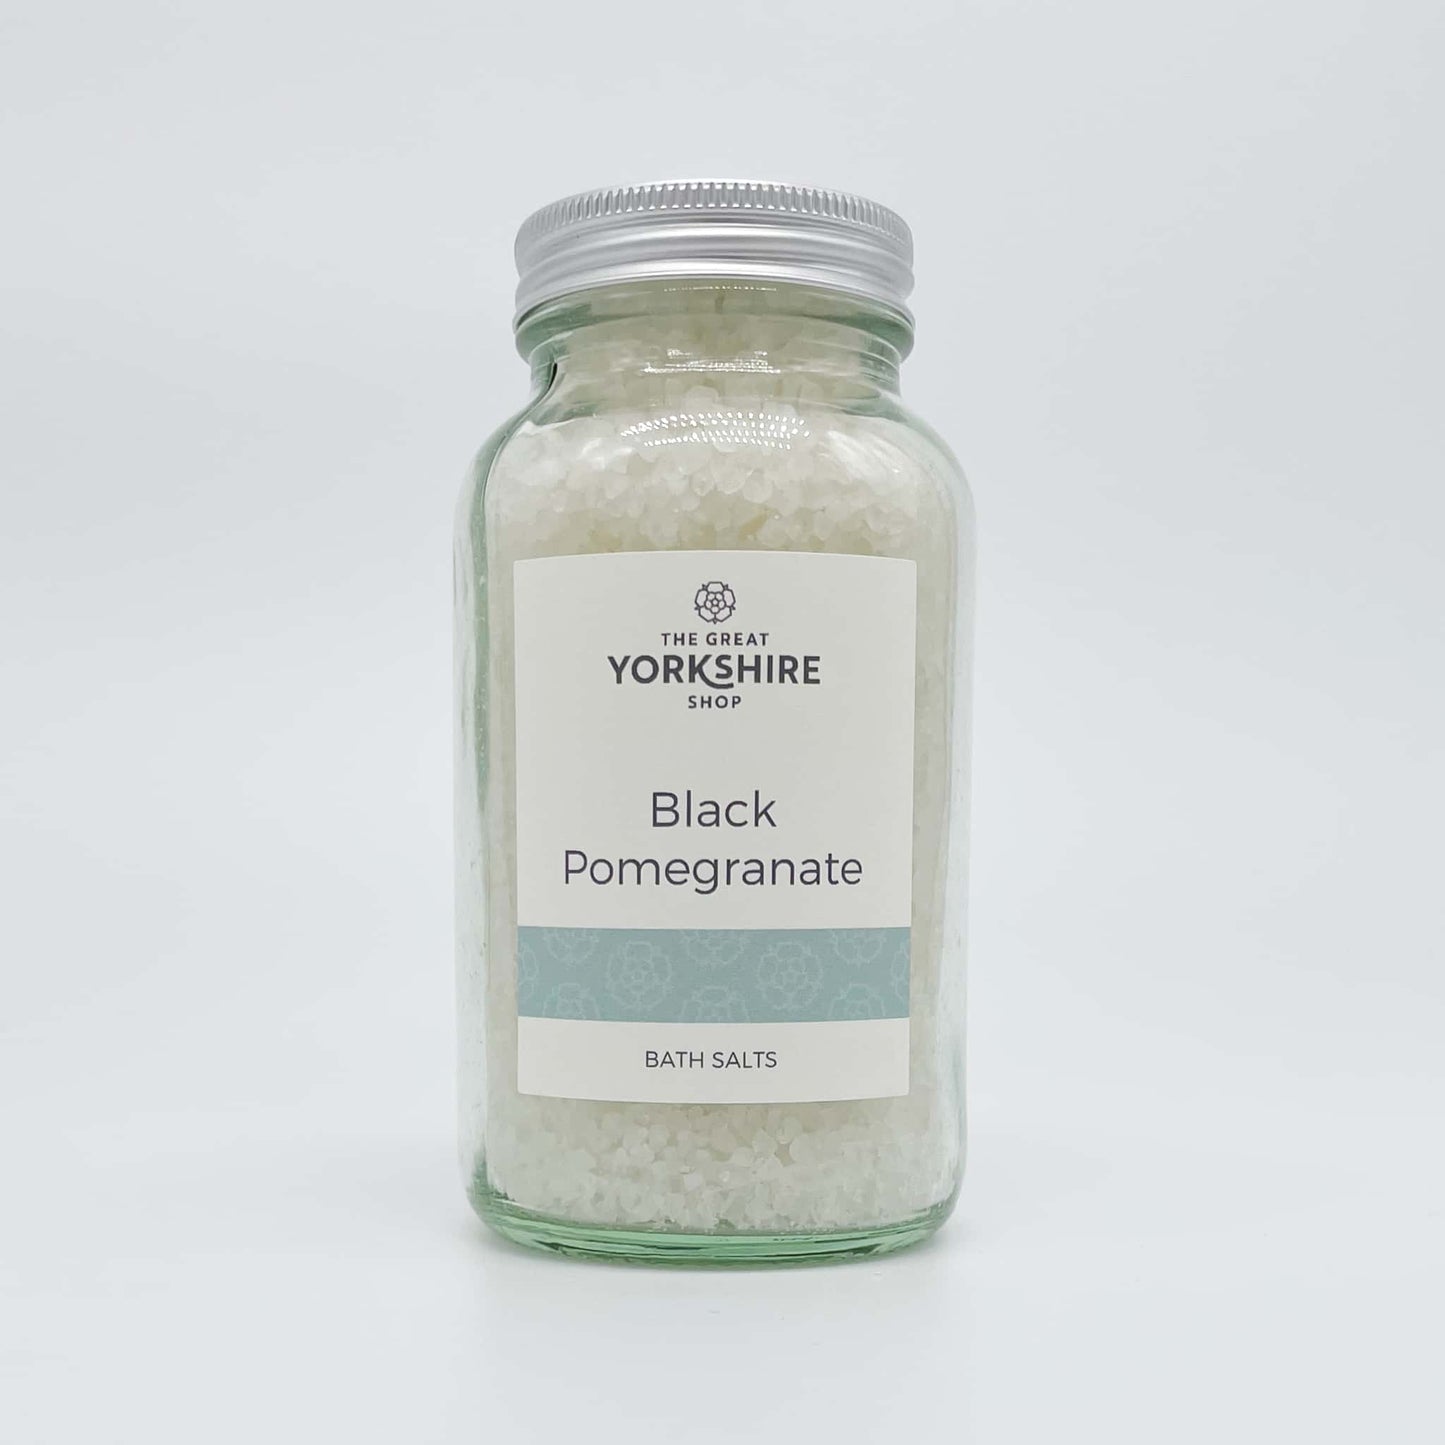 Black Pomegranate Bath Salts - The Great Yorkshire Shop